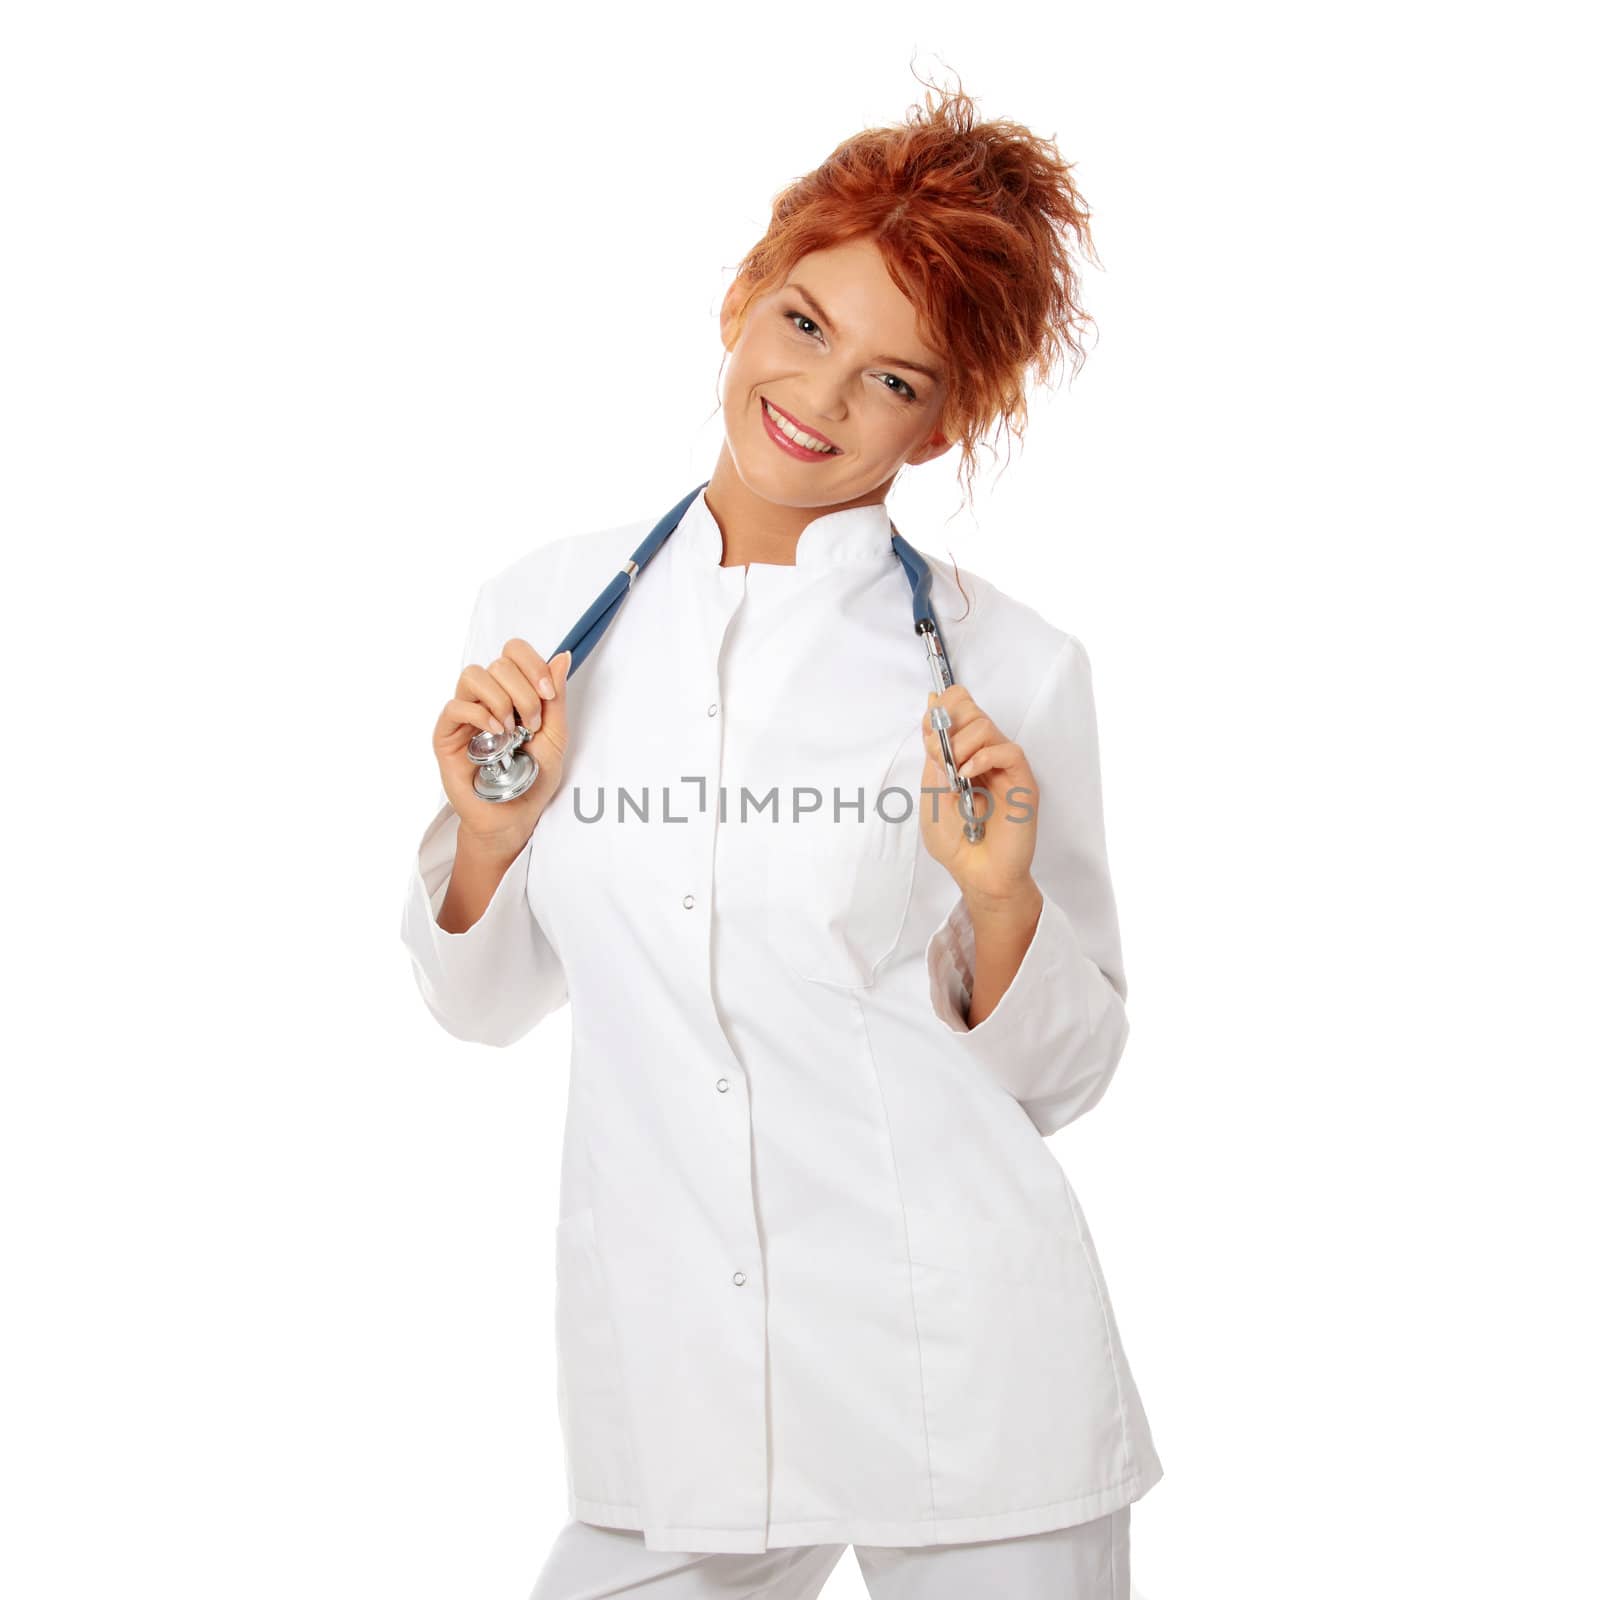 Smiling medical doctor or nurse. Isolated on white background